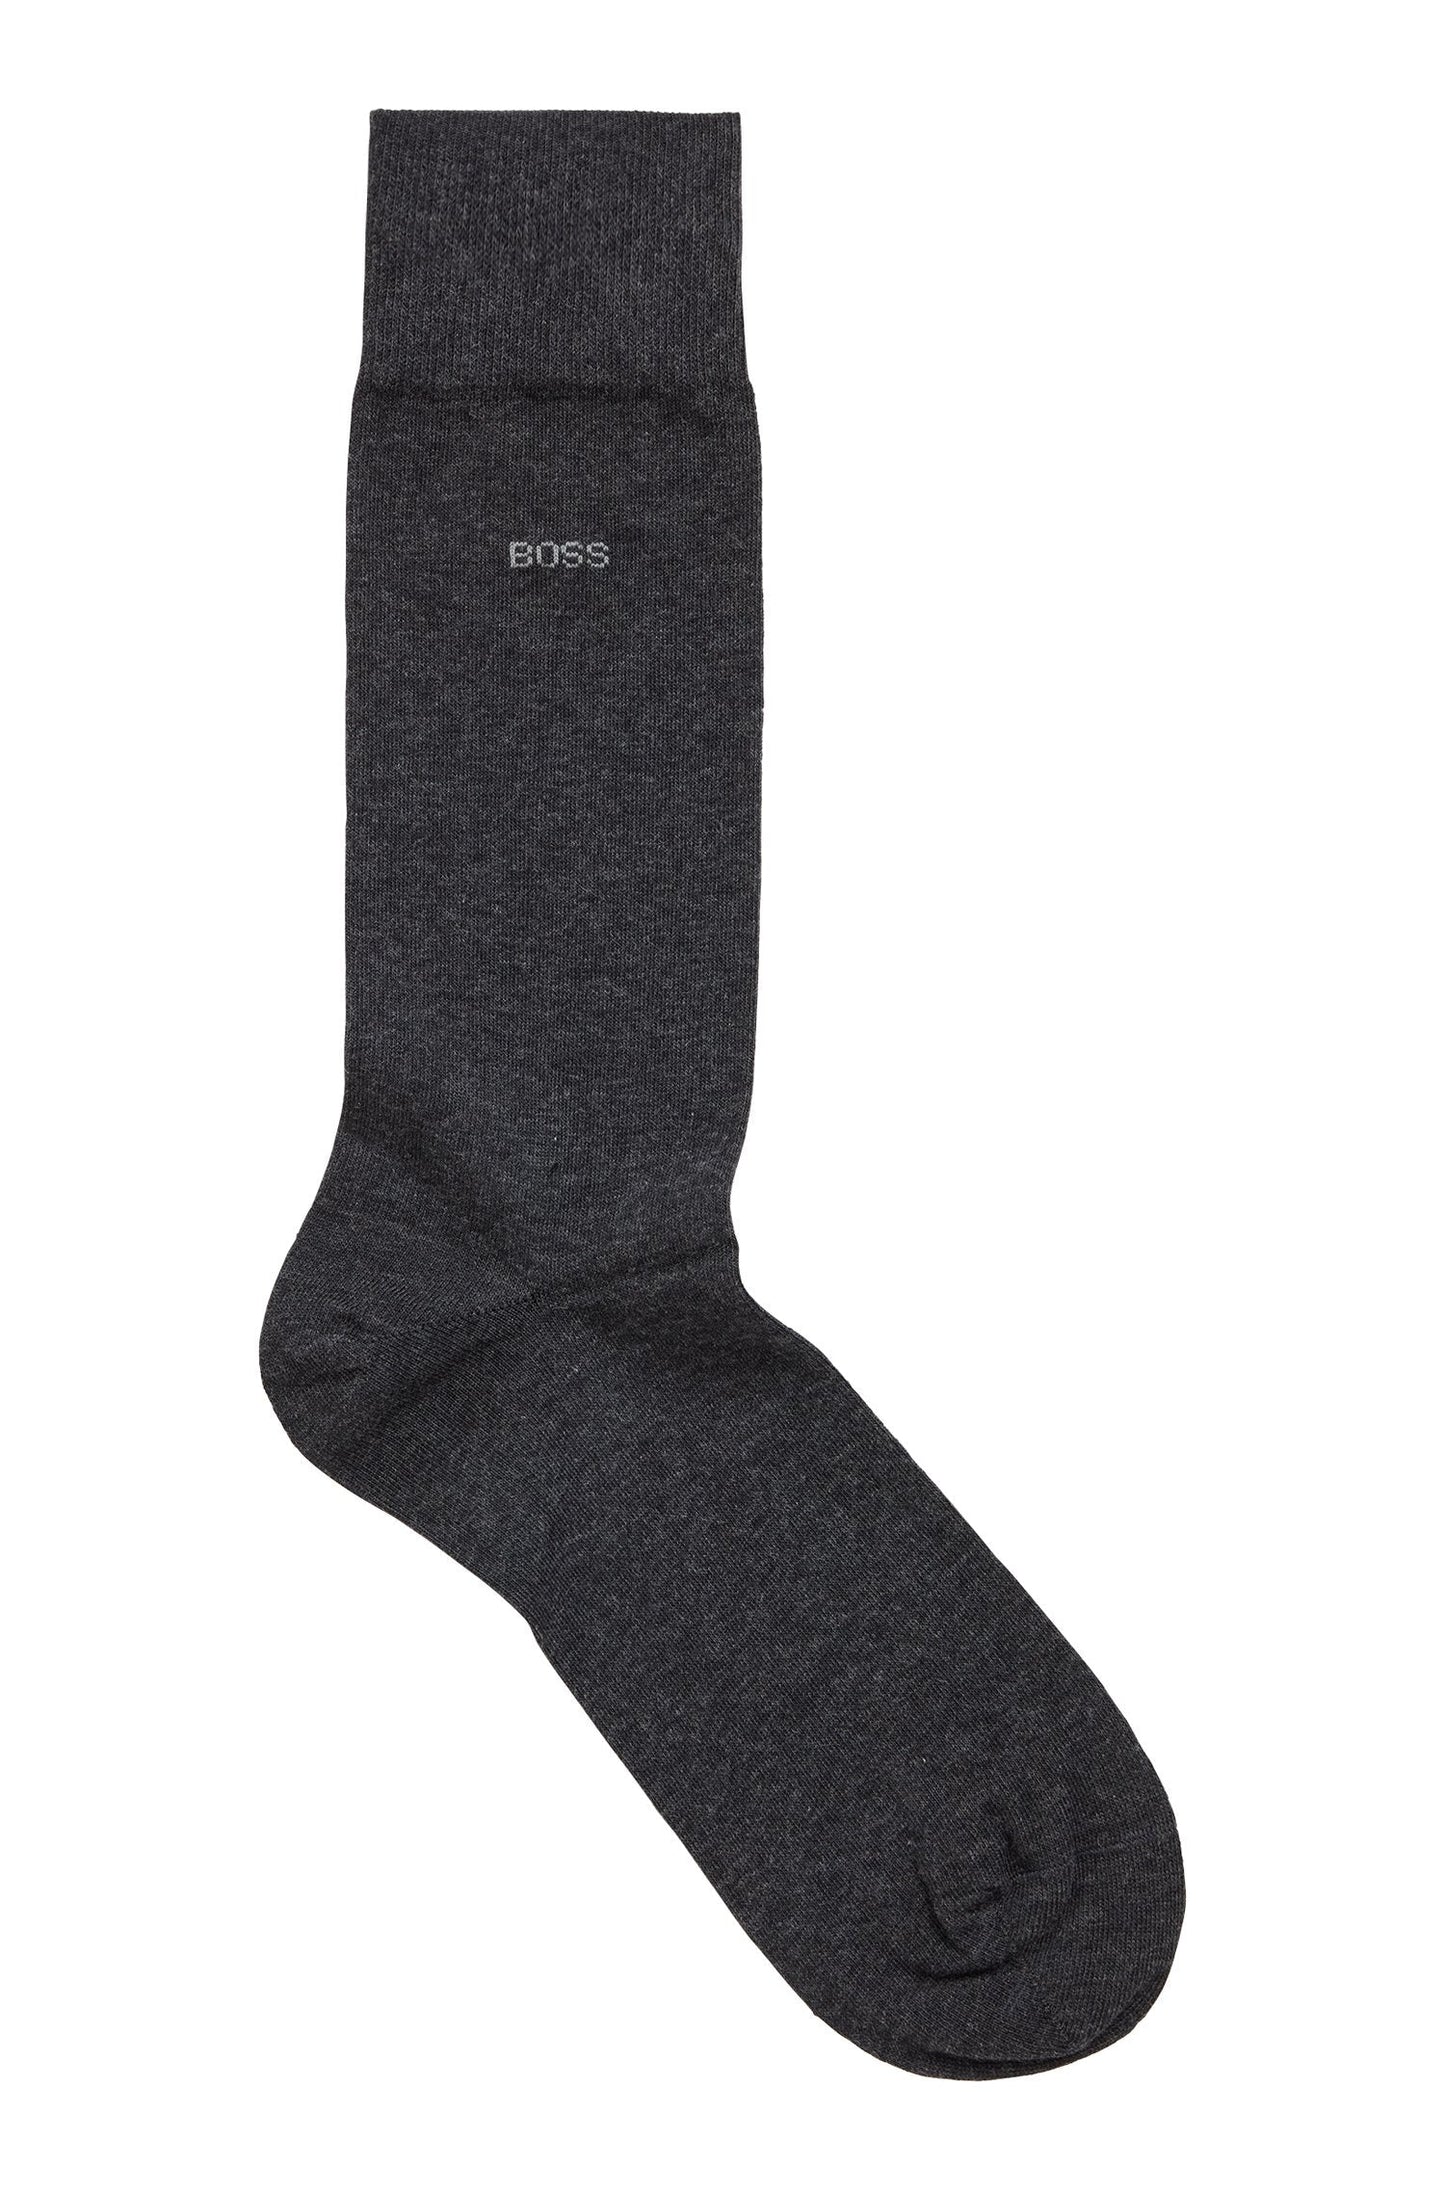 Boss Casual Socks - Marc RS Uni CC dnm Casual Socks Boss Business Charcoal 012 43-46 